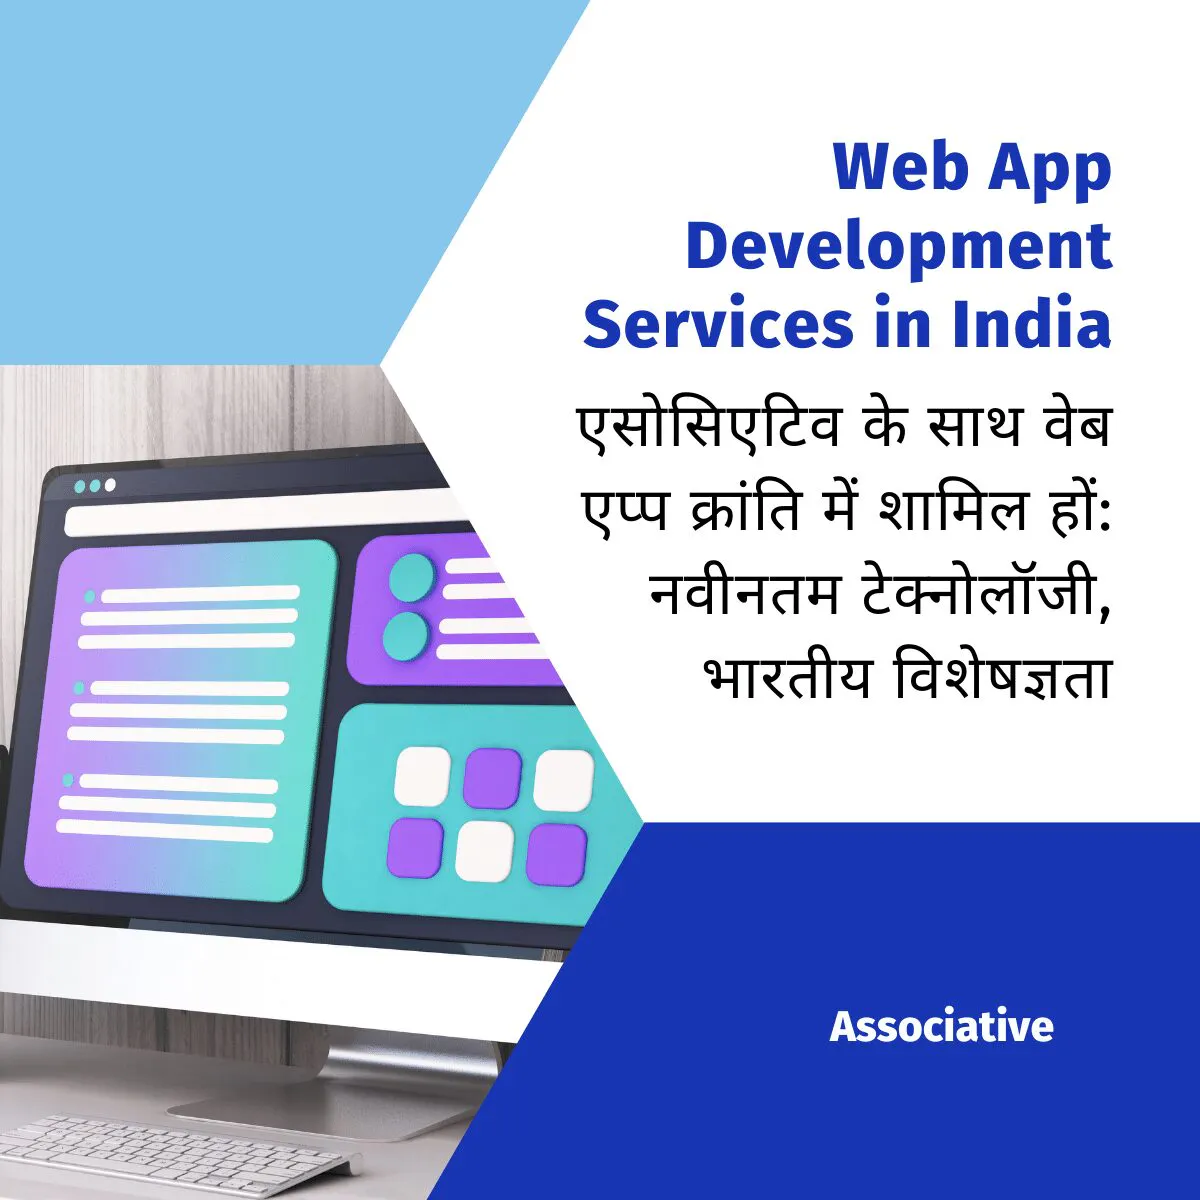 Web App Development Services in India